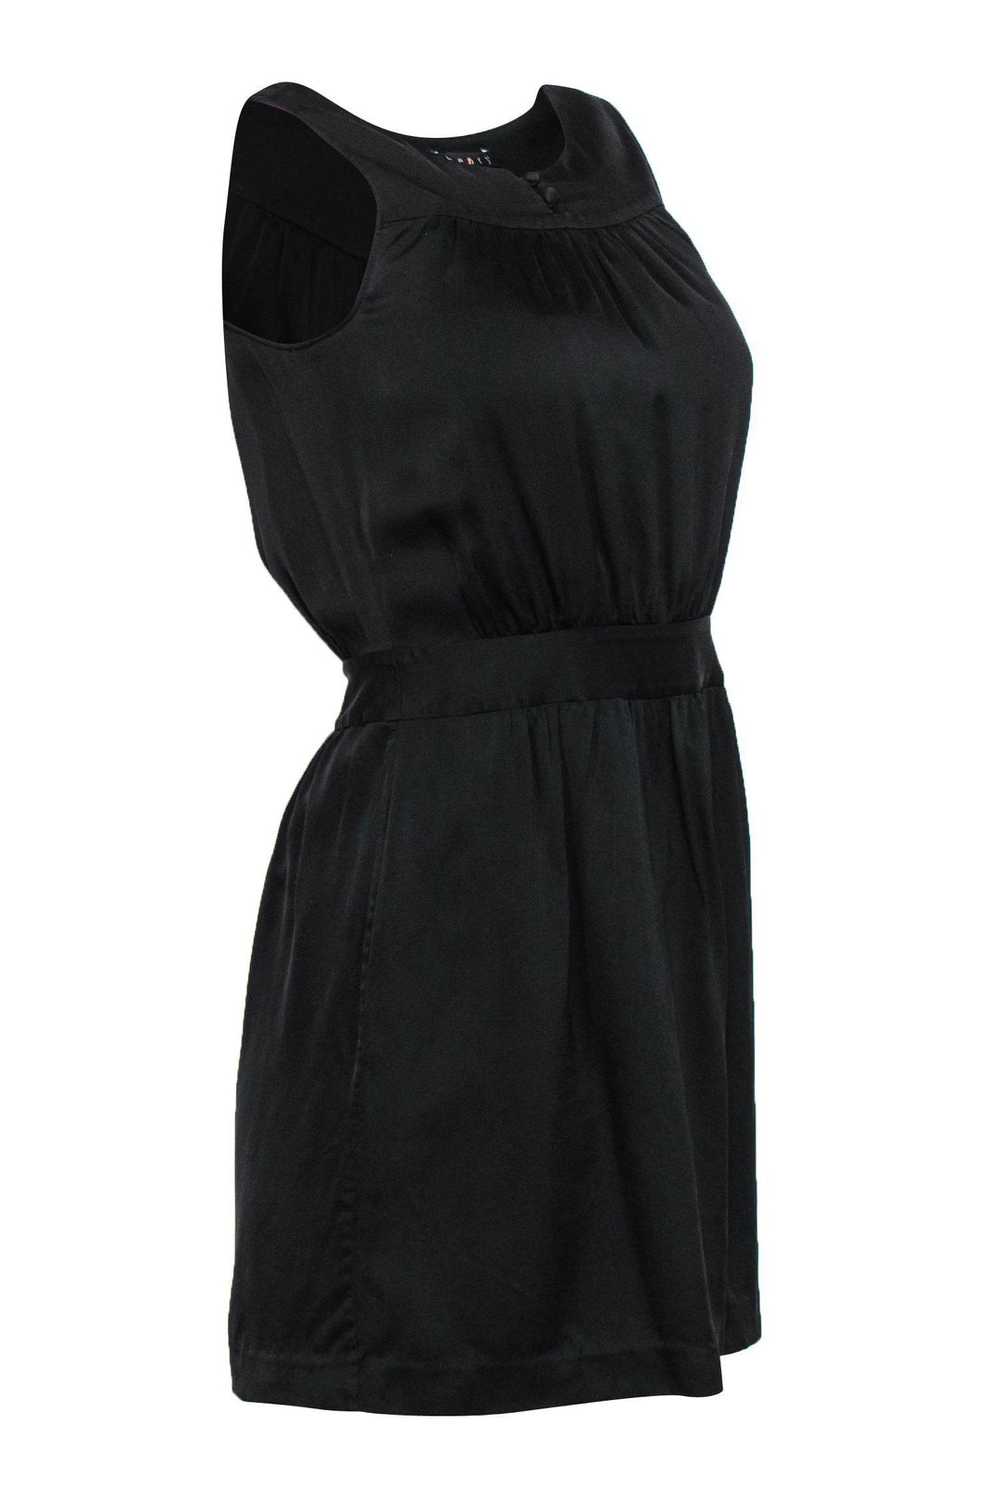 Theory - Black Silk Fitted Mini Dress Sz 0 - image 2